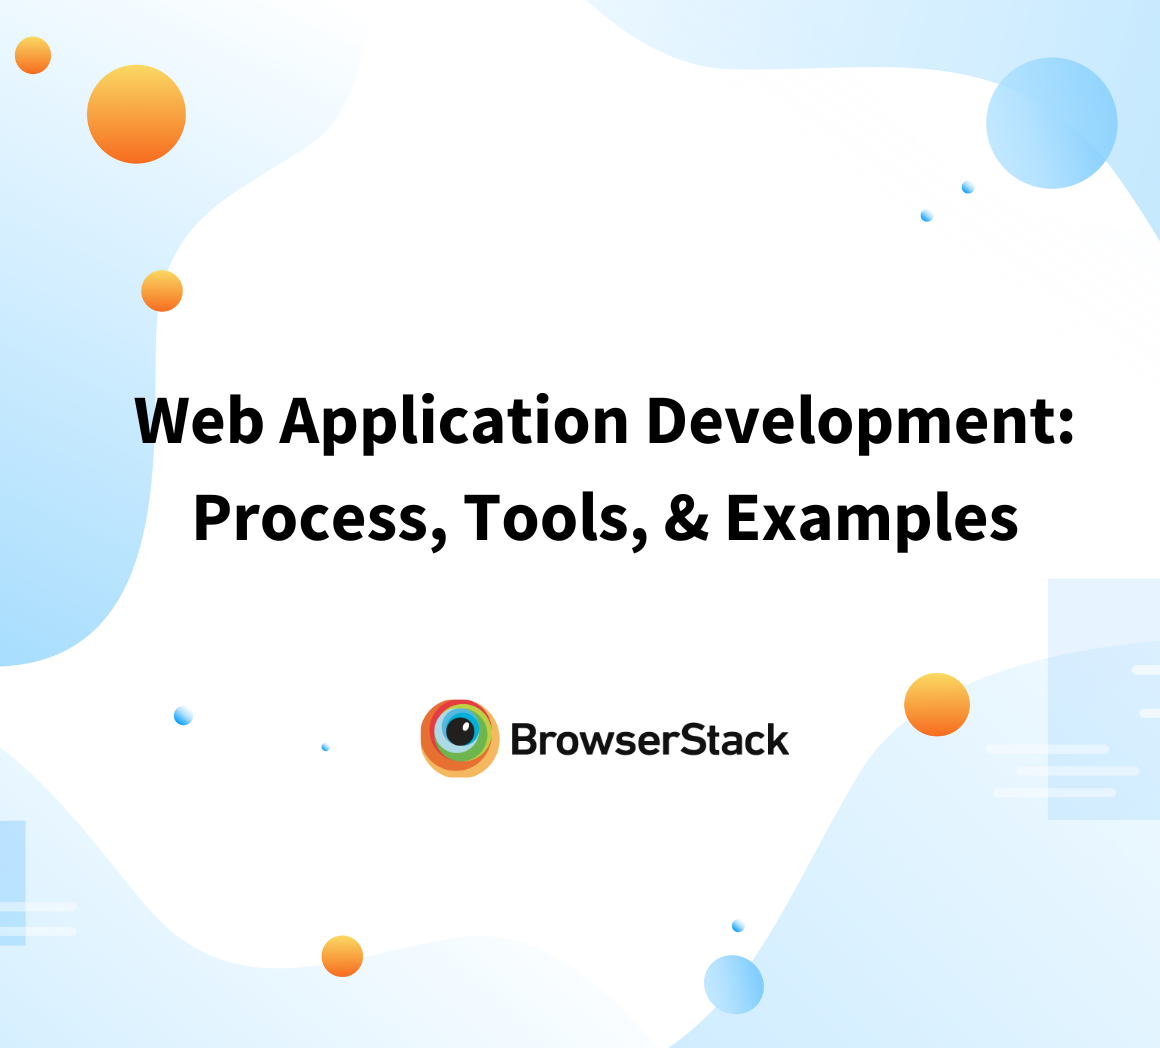 The process of web application development